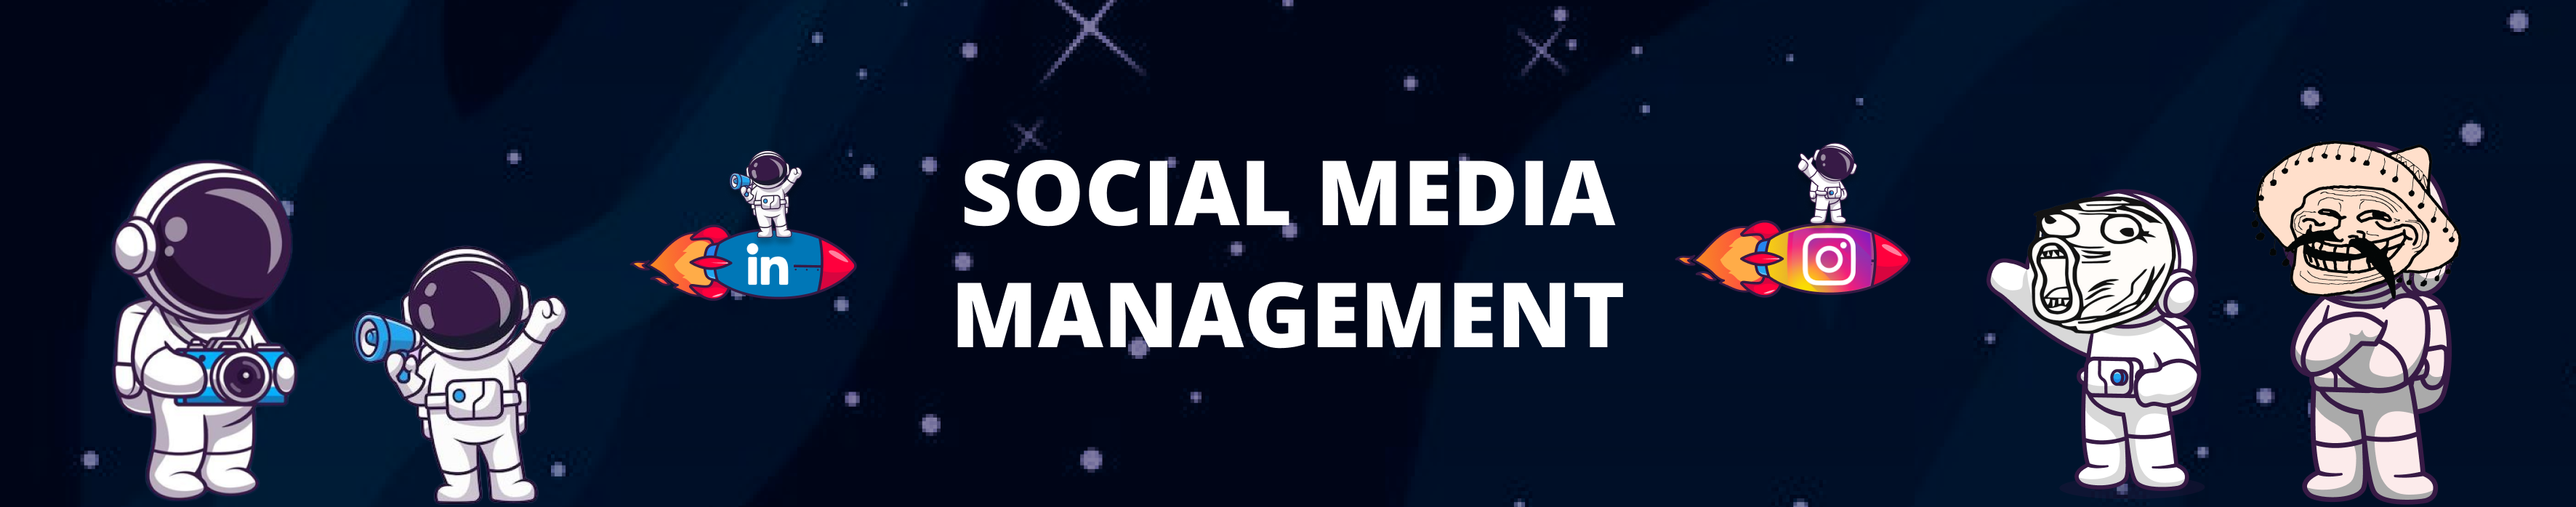 Social Media Management, Creative Digital Marketing Company, Auxost, DV